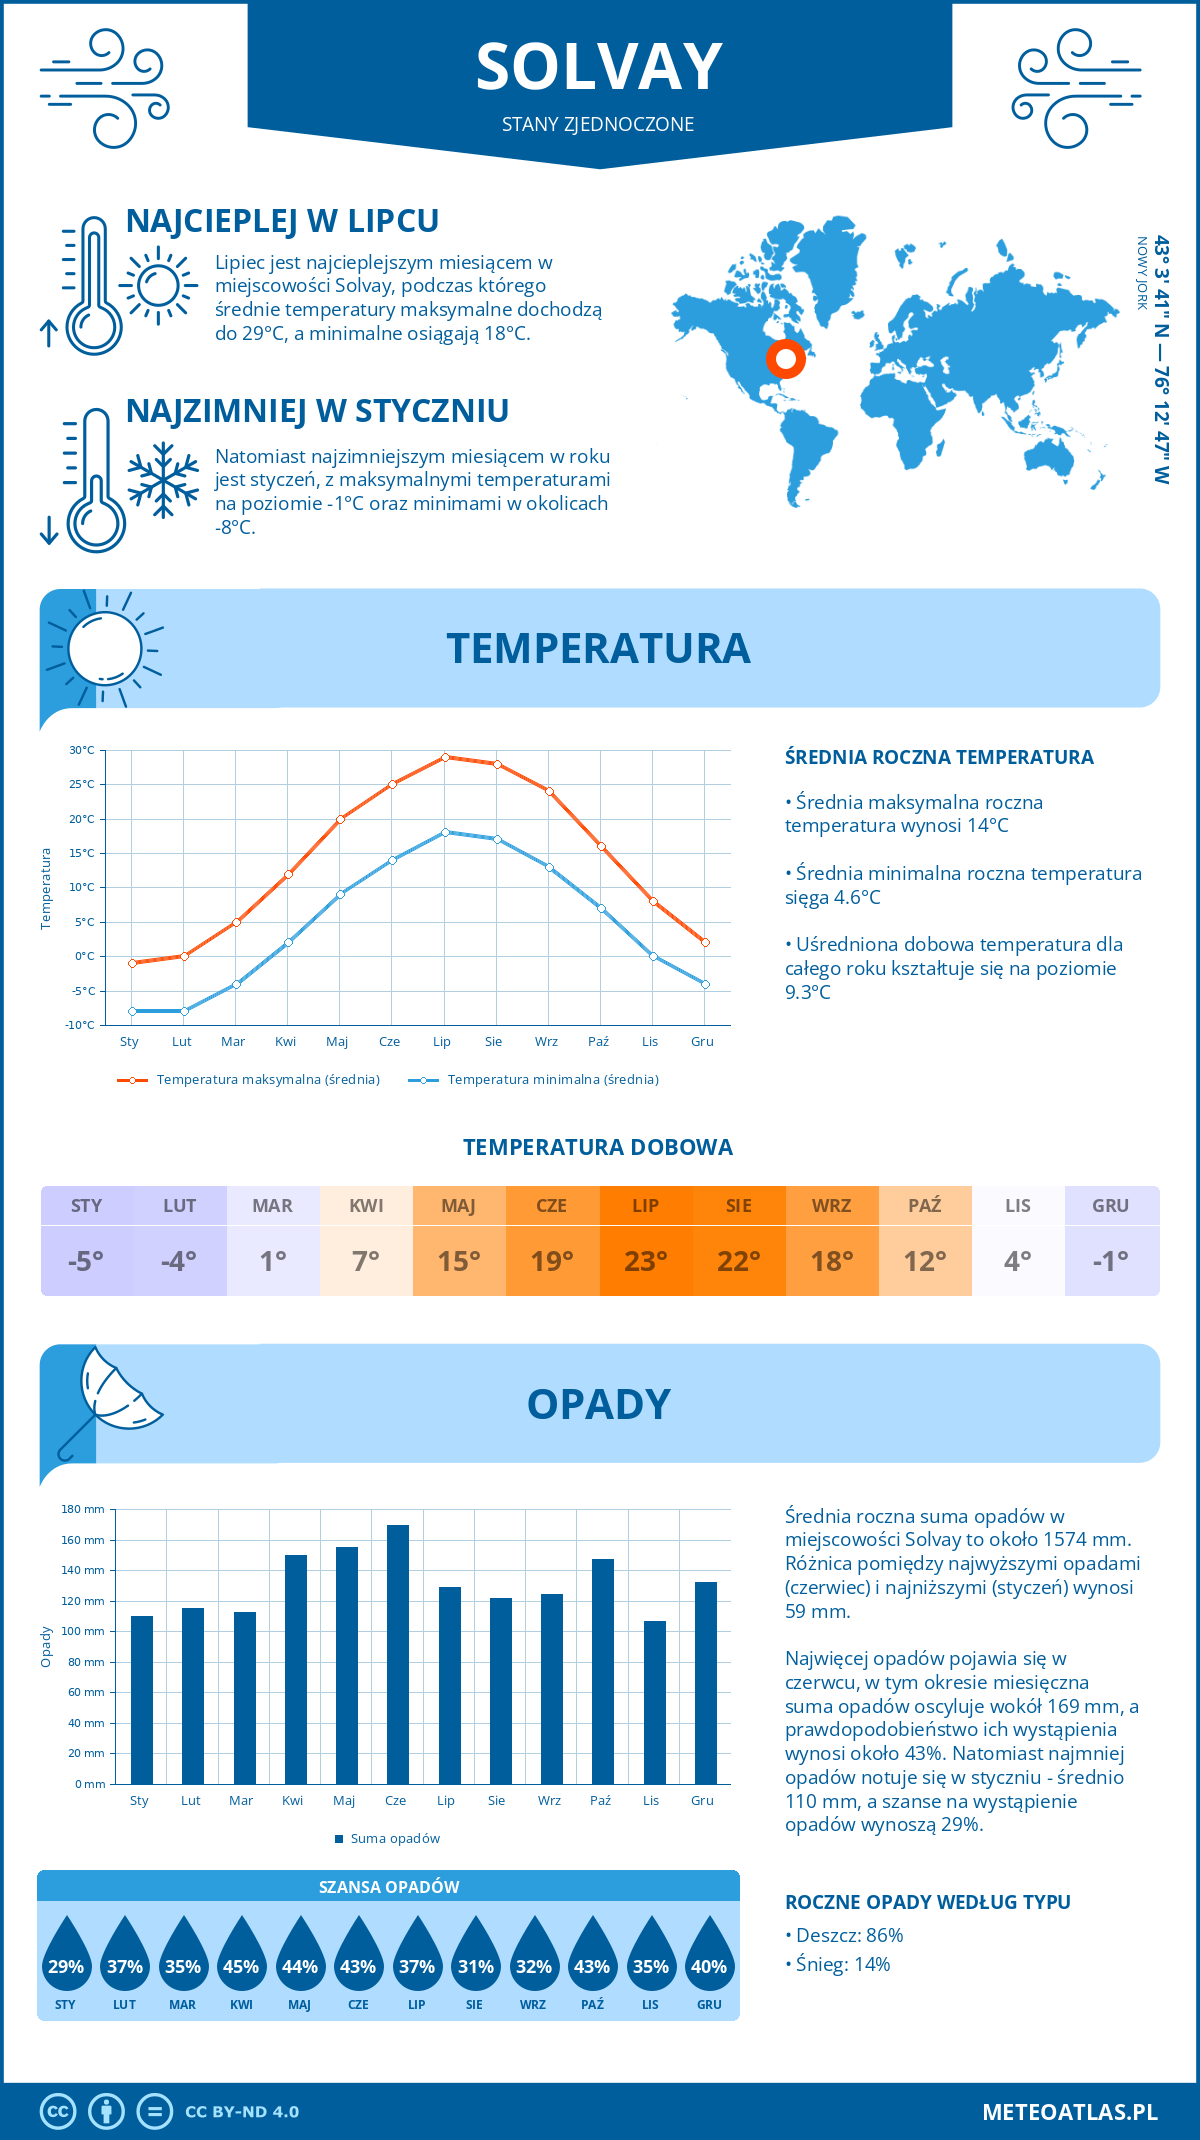 Pogoda Solvay (Stany Zjednoczone). Temperatura oraz opady.